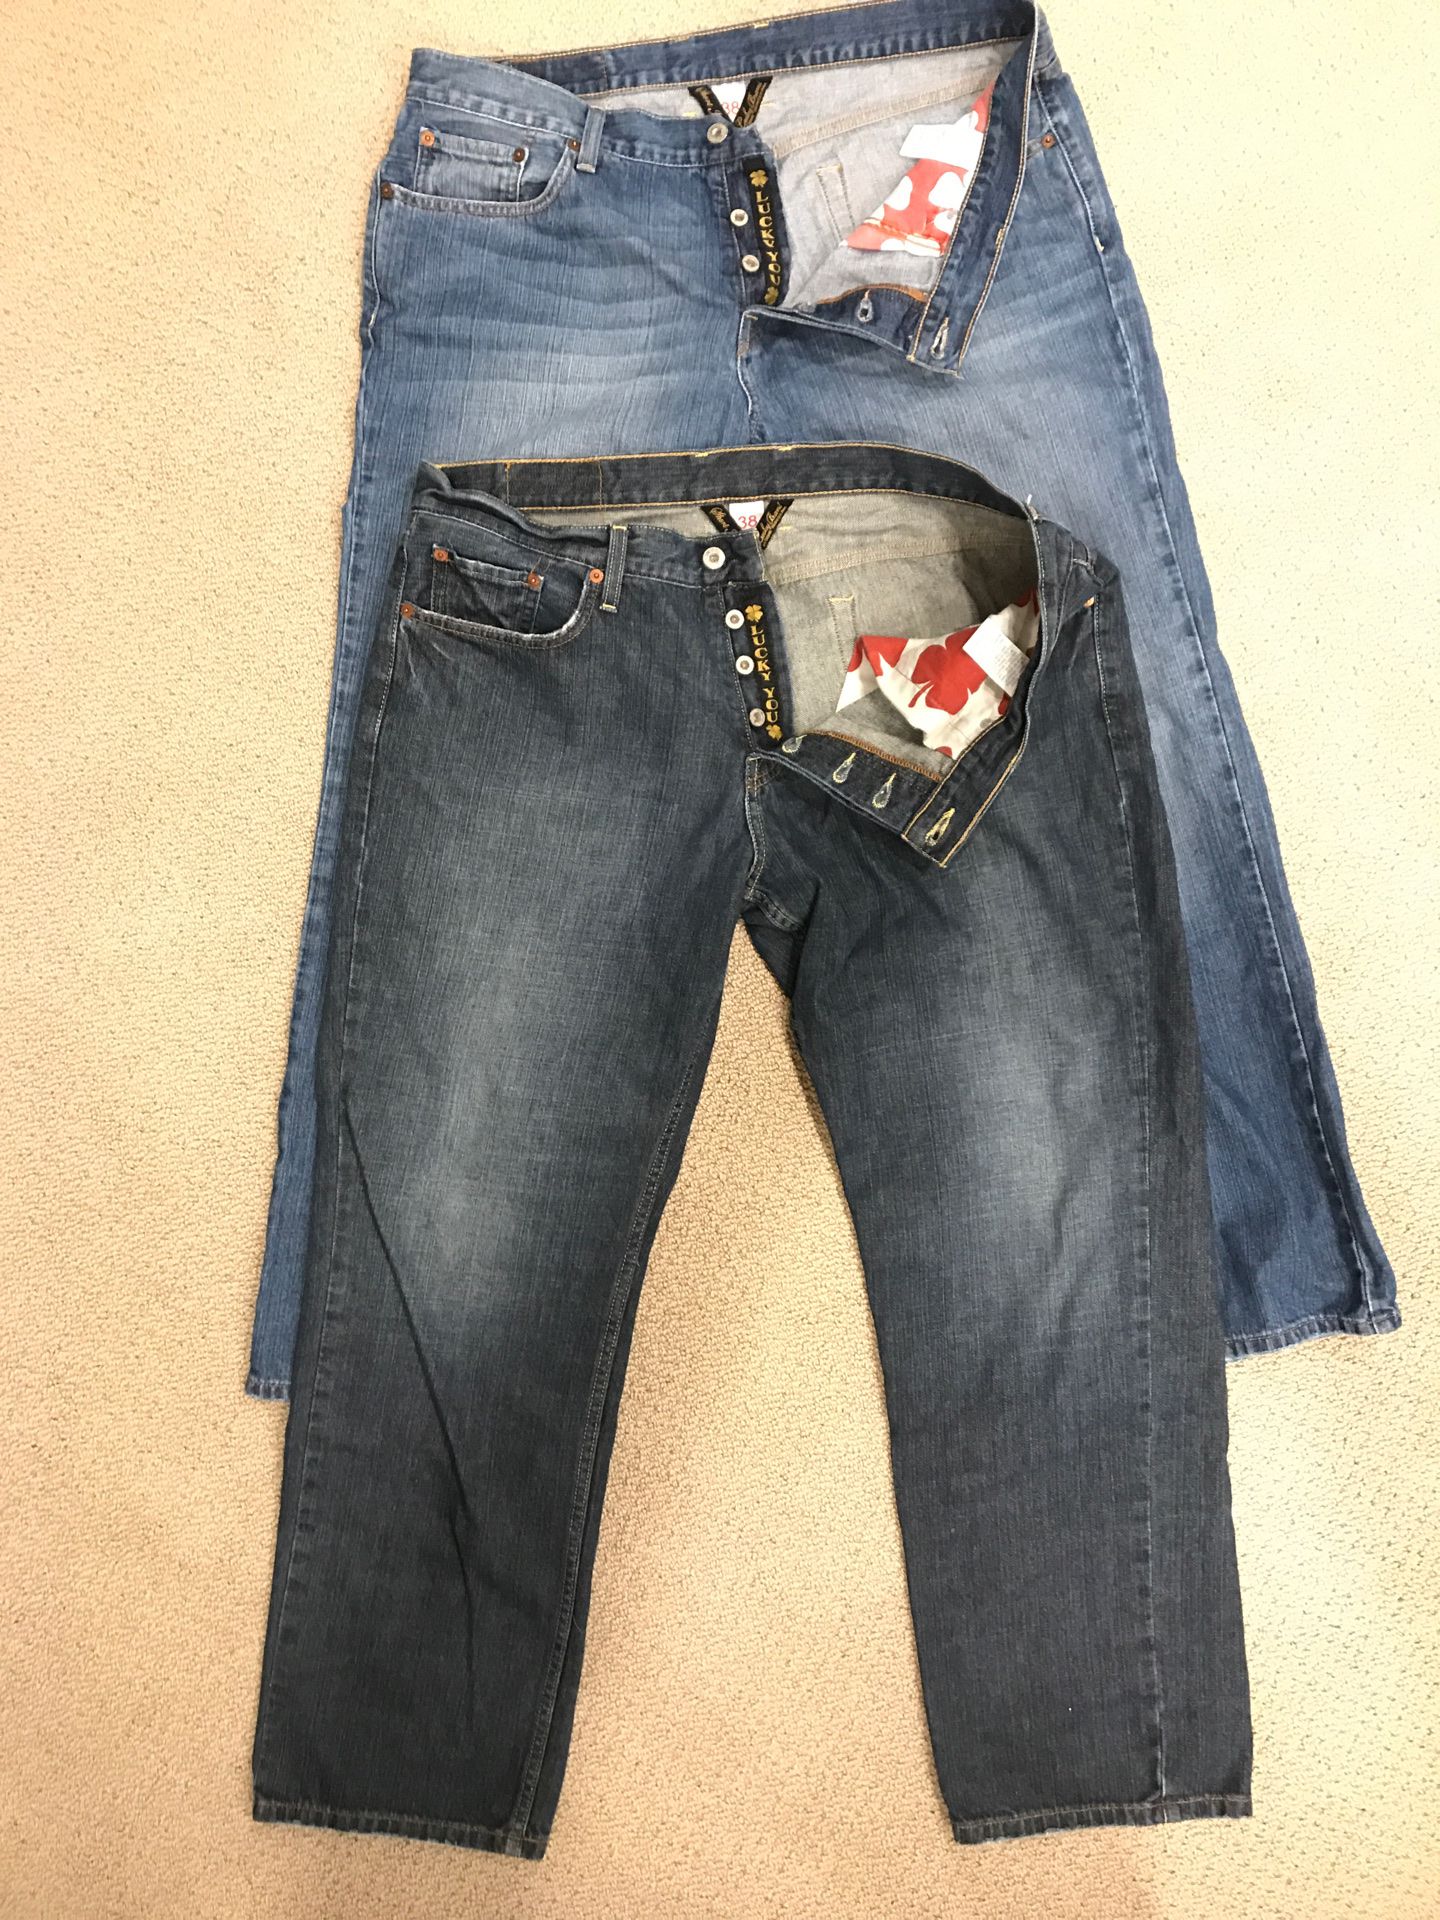 Lucky denium button fly jeans 38 x 32